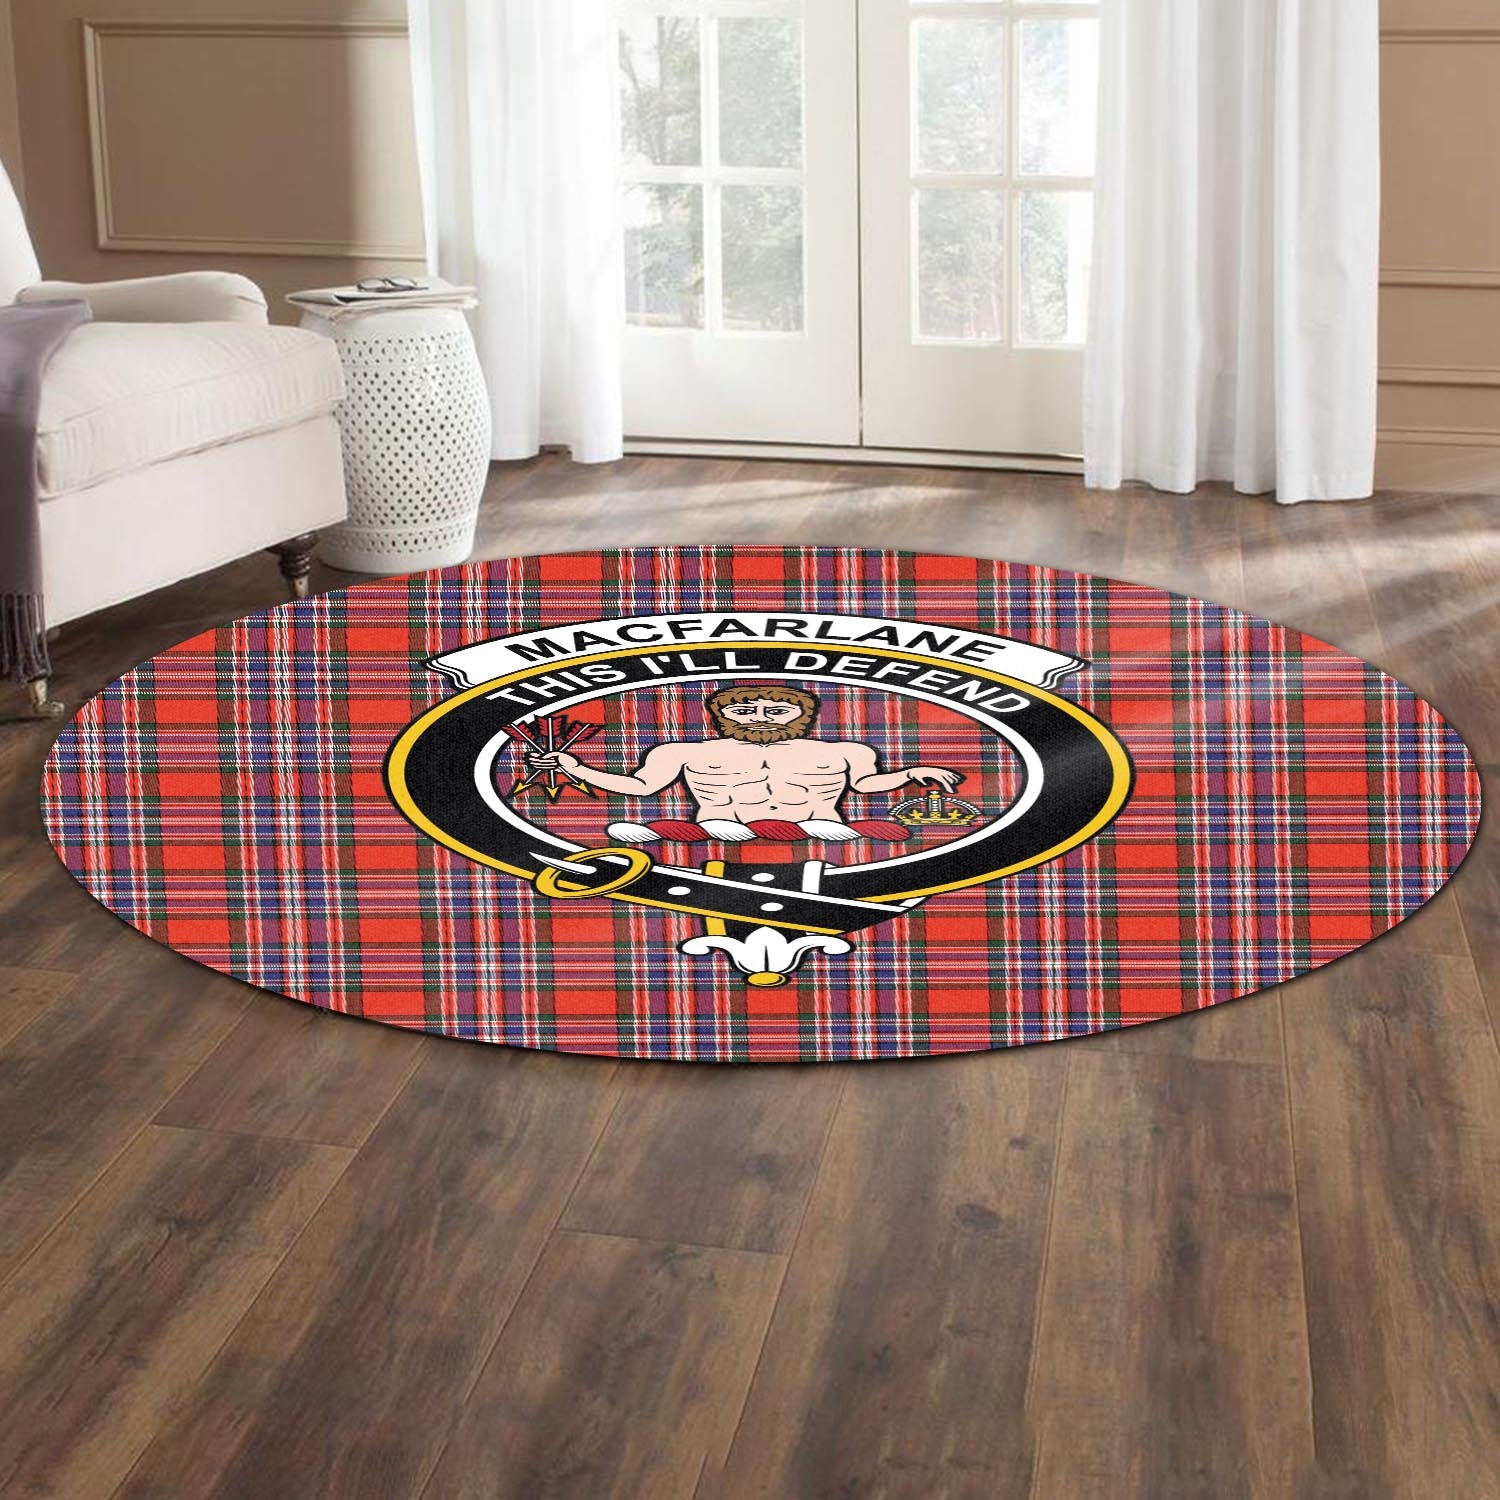 macfarlane-modern-tartan-round-rug-with-family-crest